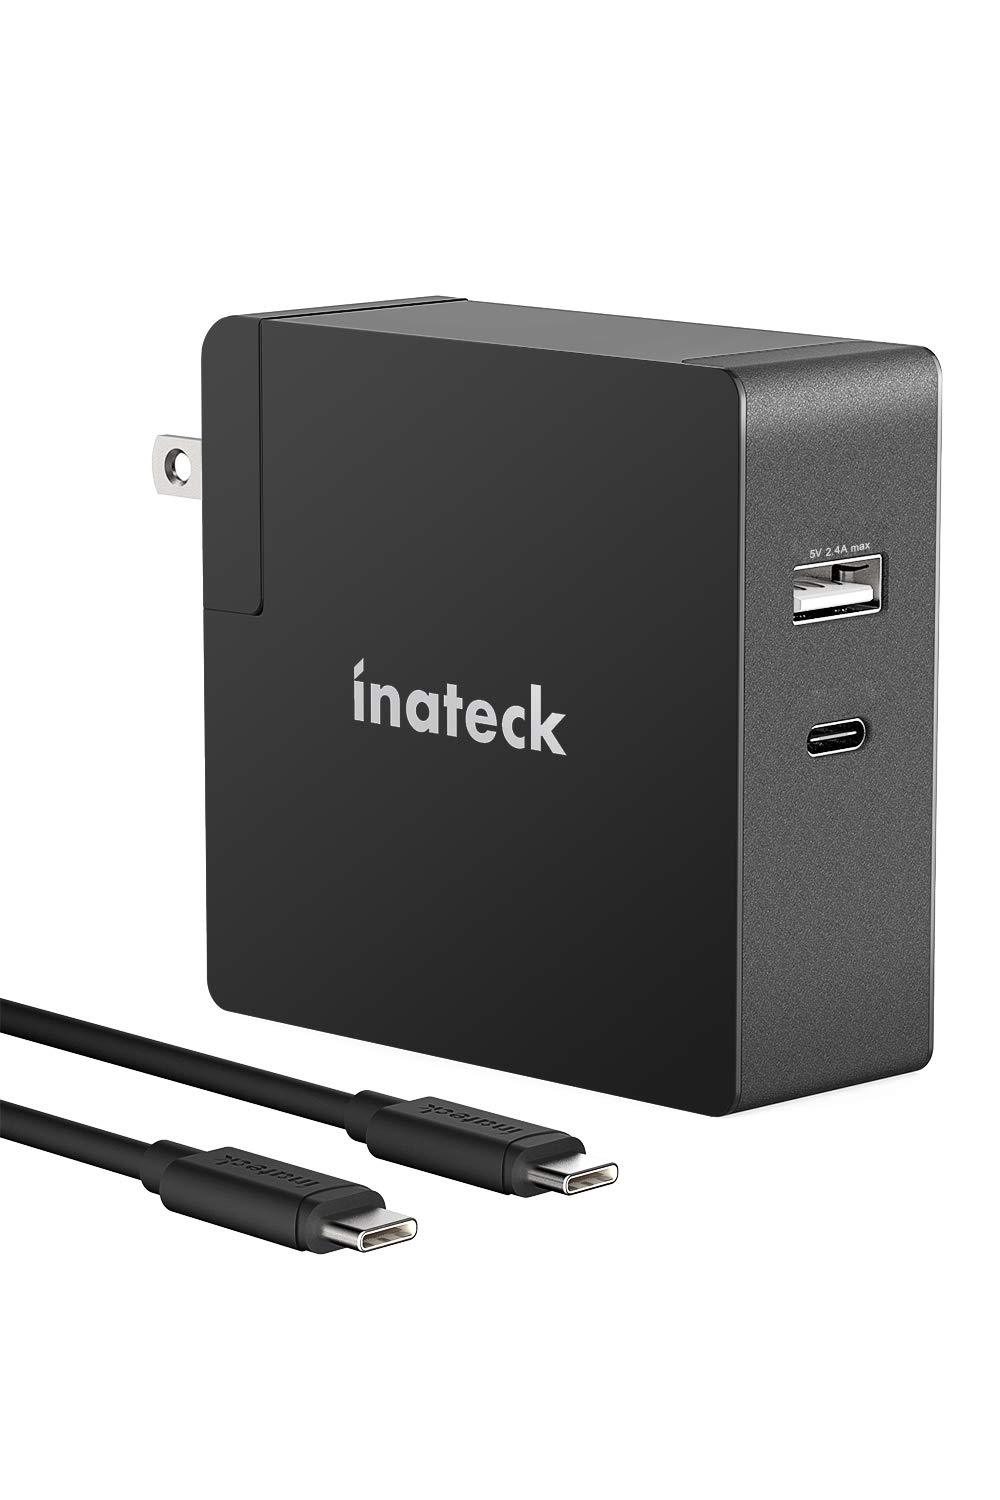 Inateck USB C充電器2MタイプCケーブル付き、60W USB-C 電源供給ポートと12W USB Aポート付き、CC01003-BK - Inateckバックパックジャパン